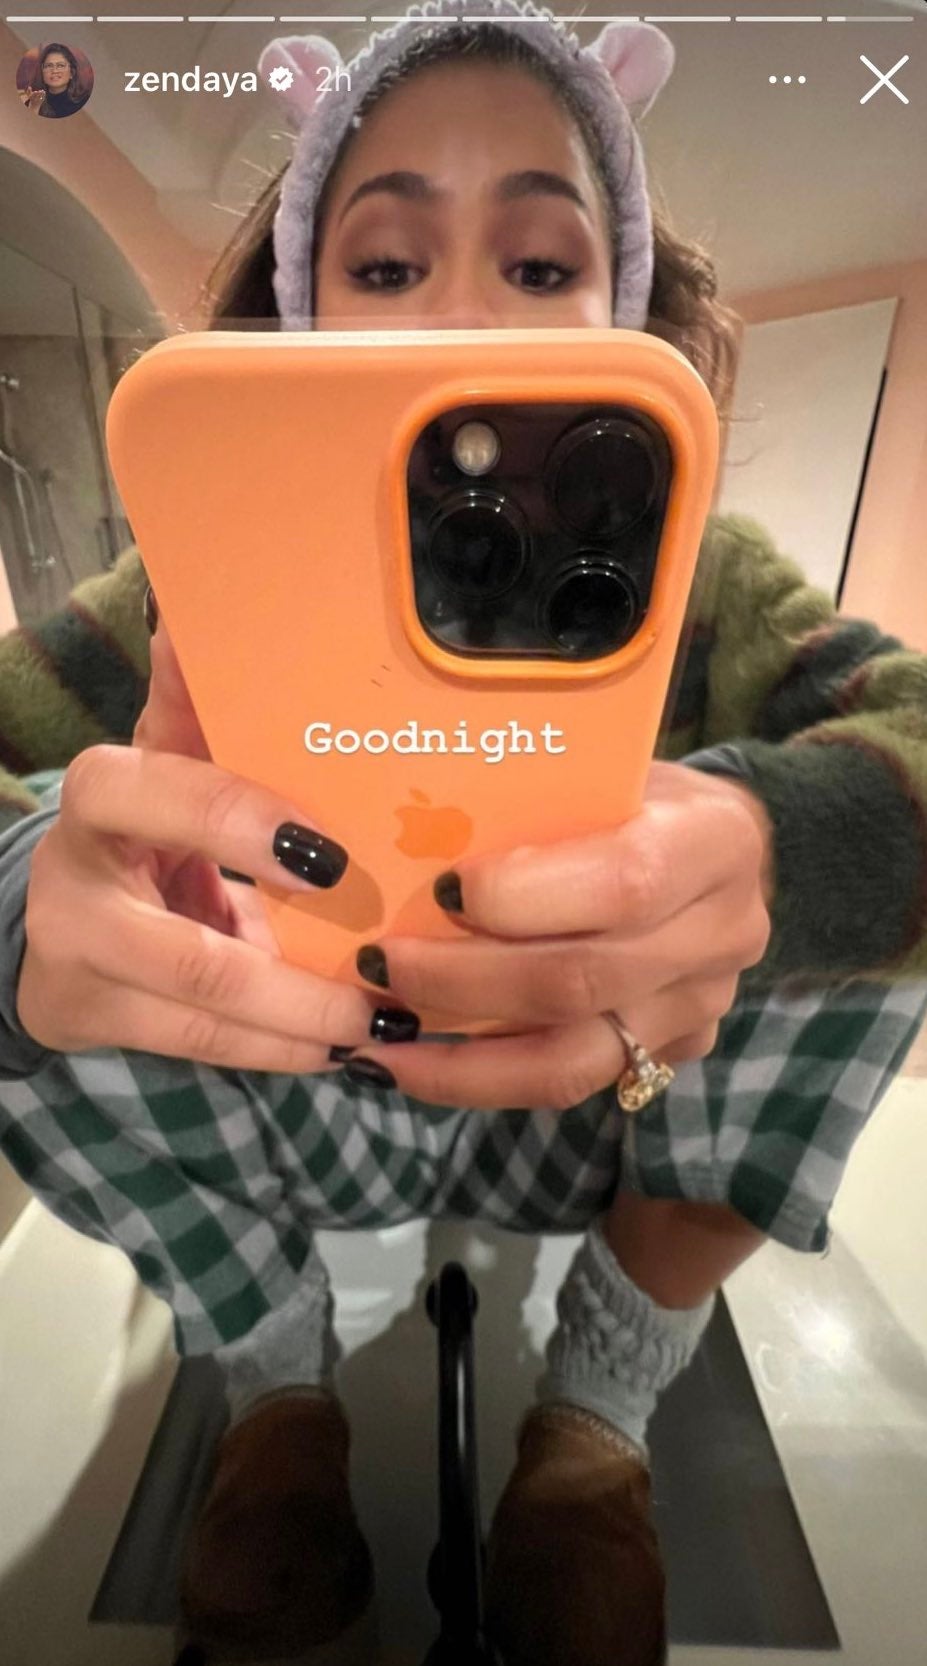 Zendaya shows off her massive diamond ring on her Instagram story